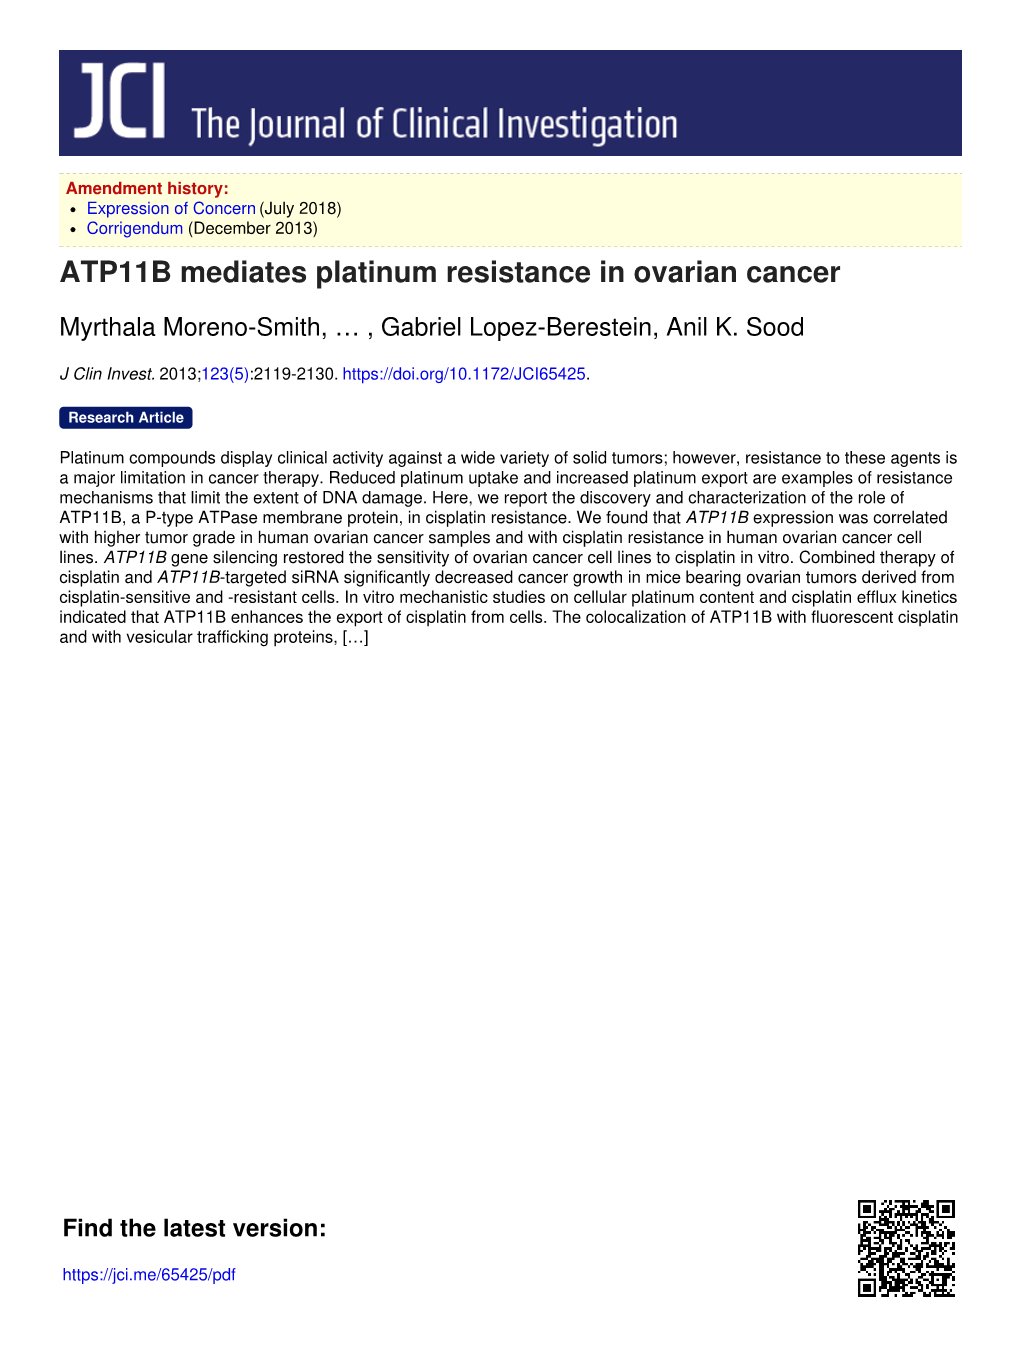 ATP11B Mediates Platinum Resistance in Ovarian Cancer